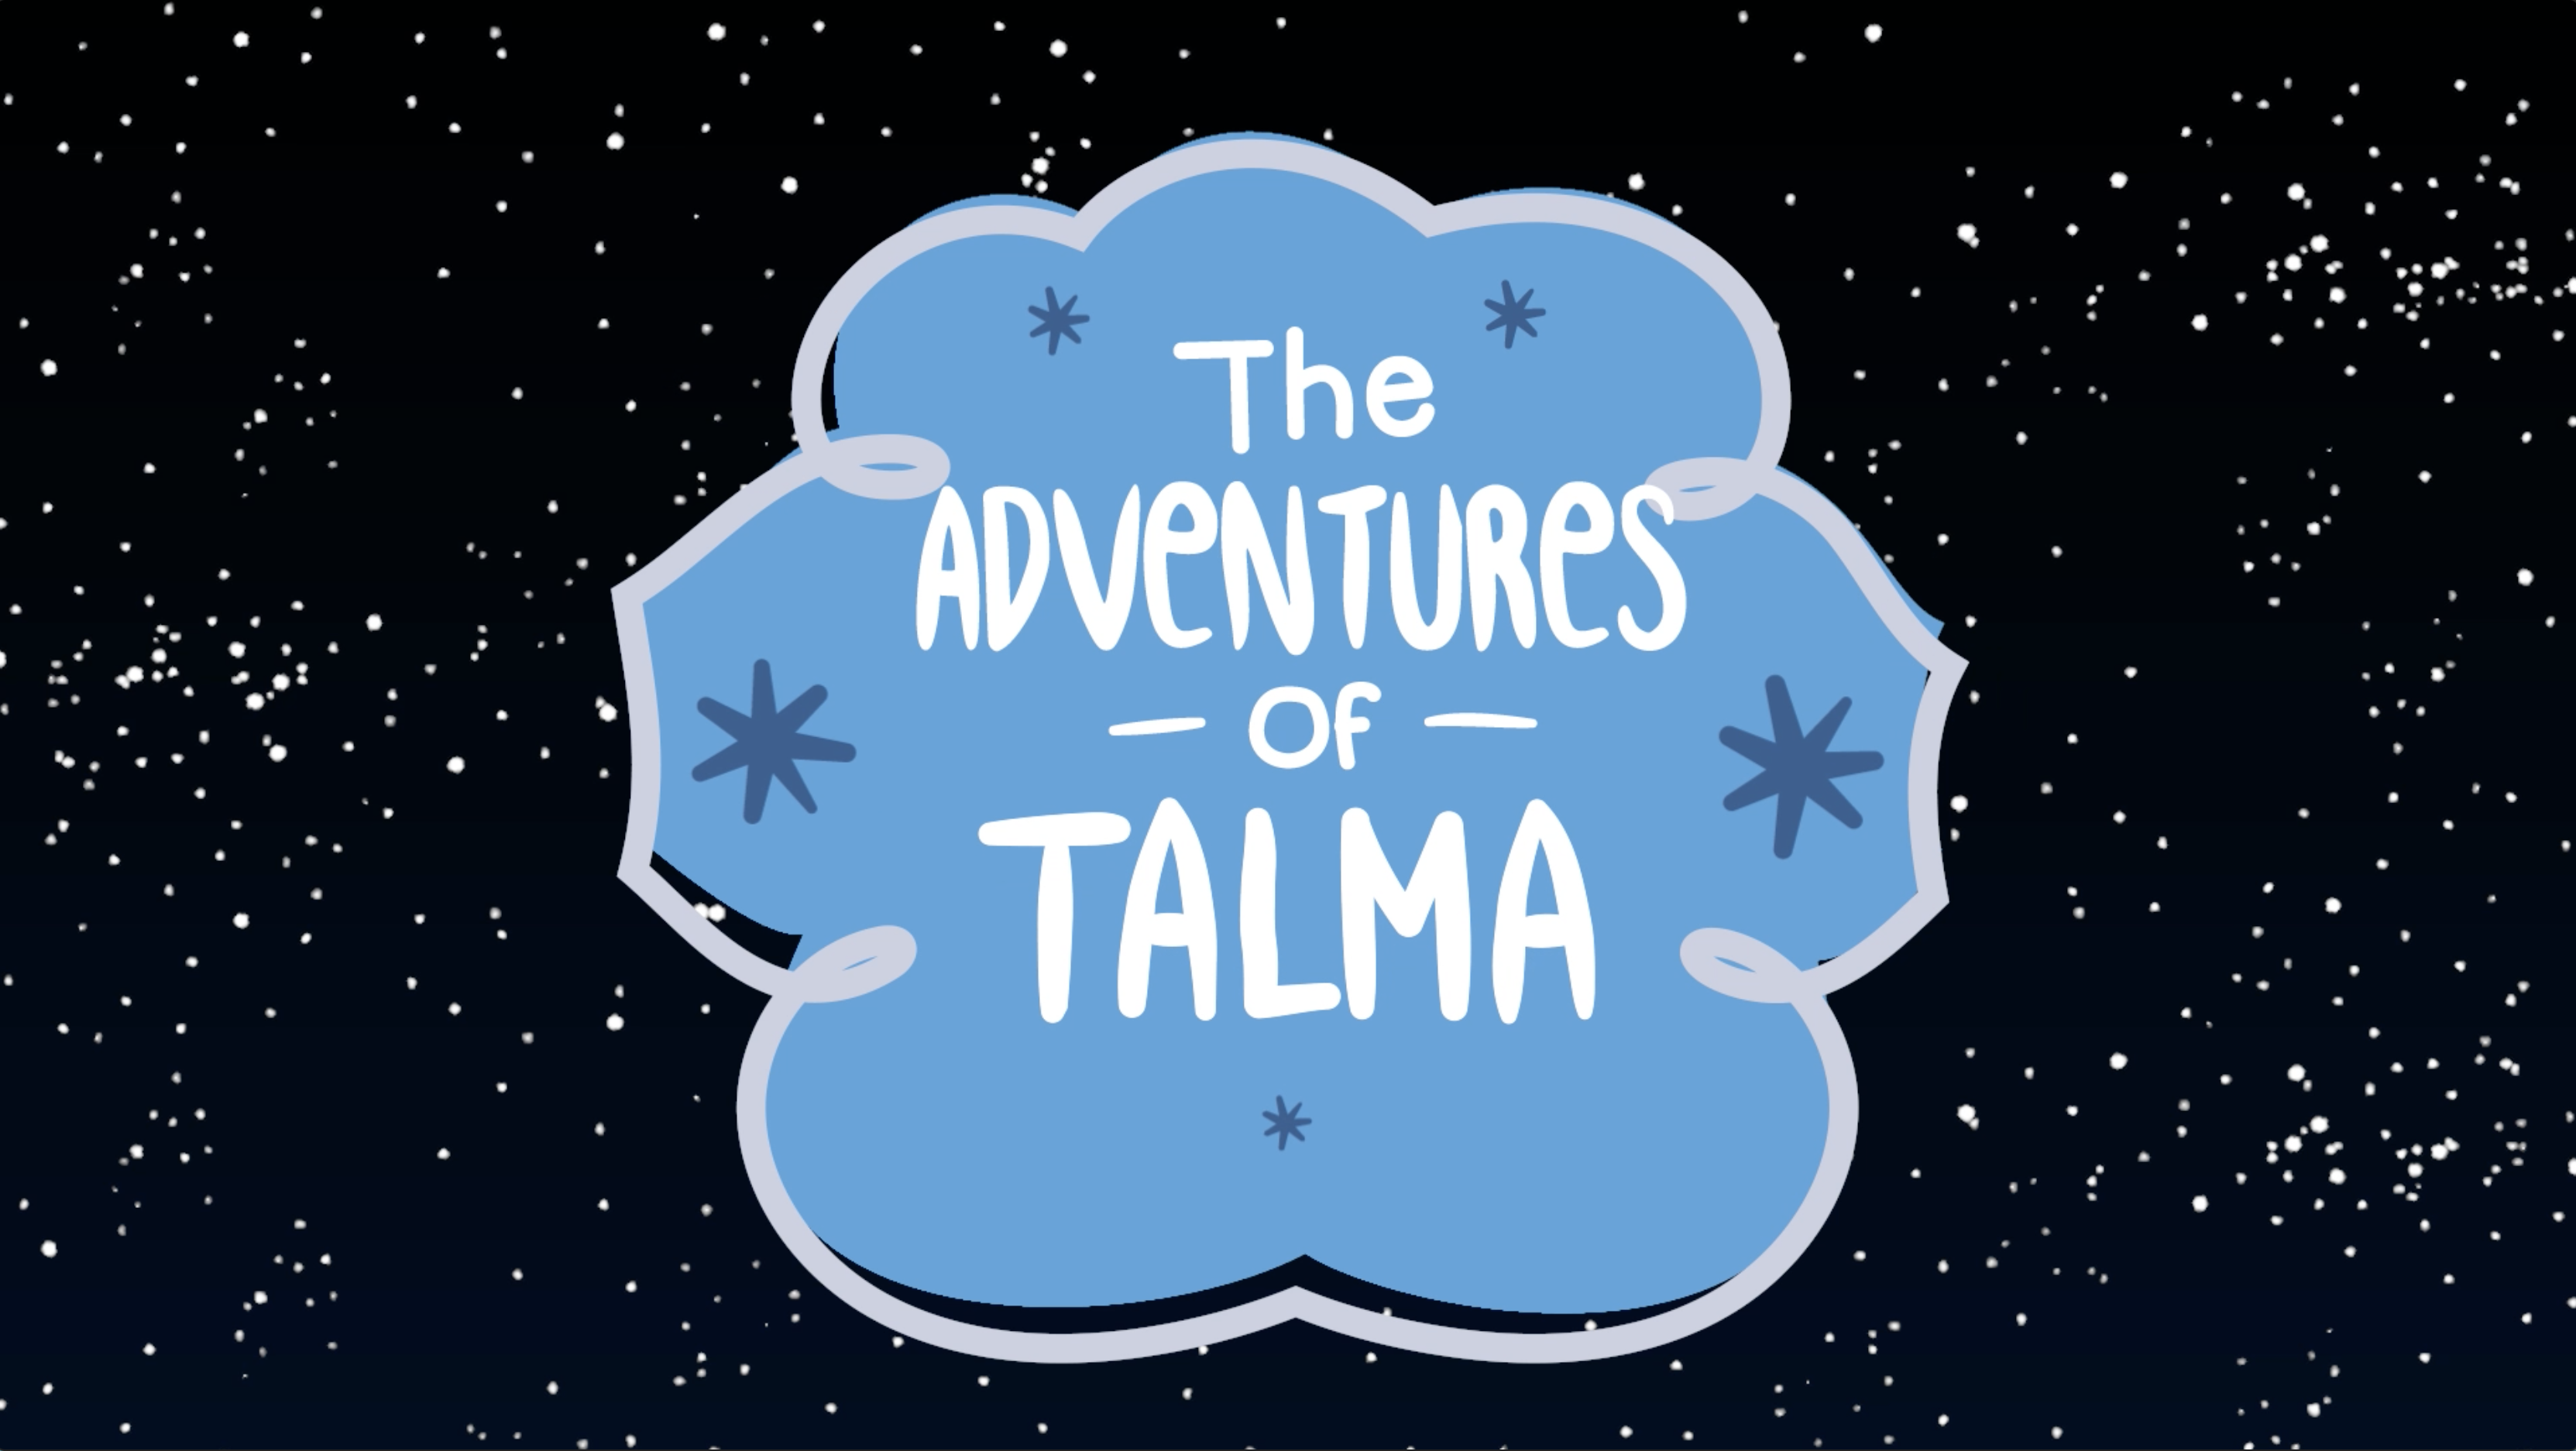 "The adventures of Talma" Series